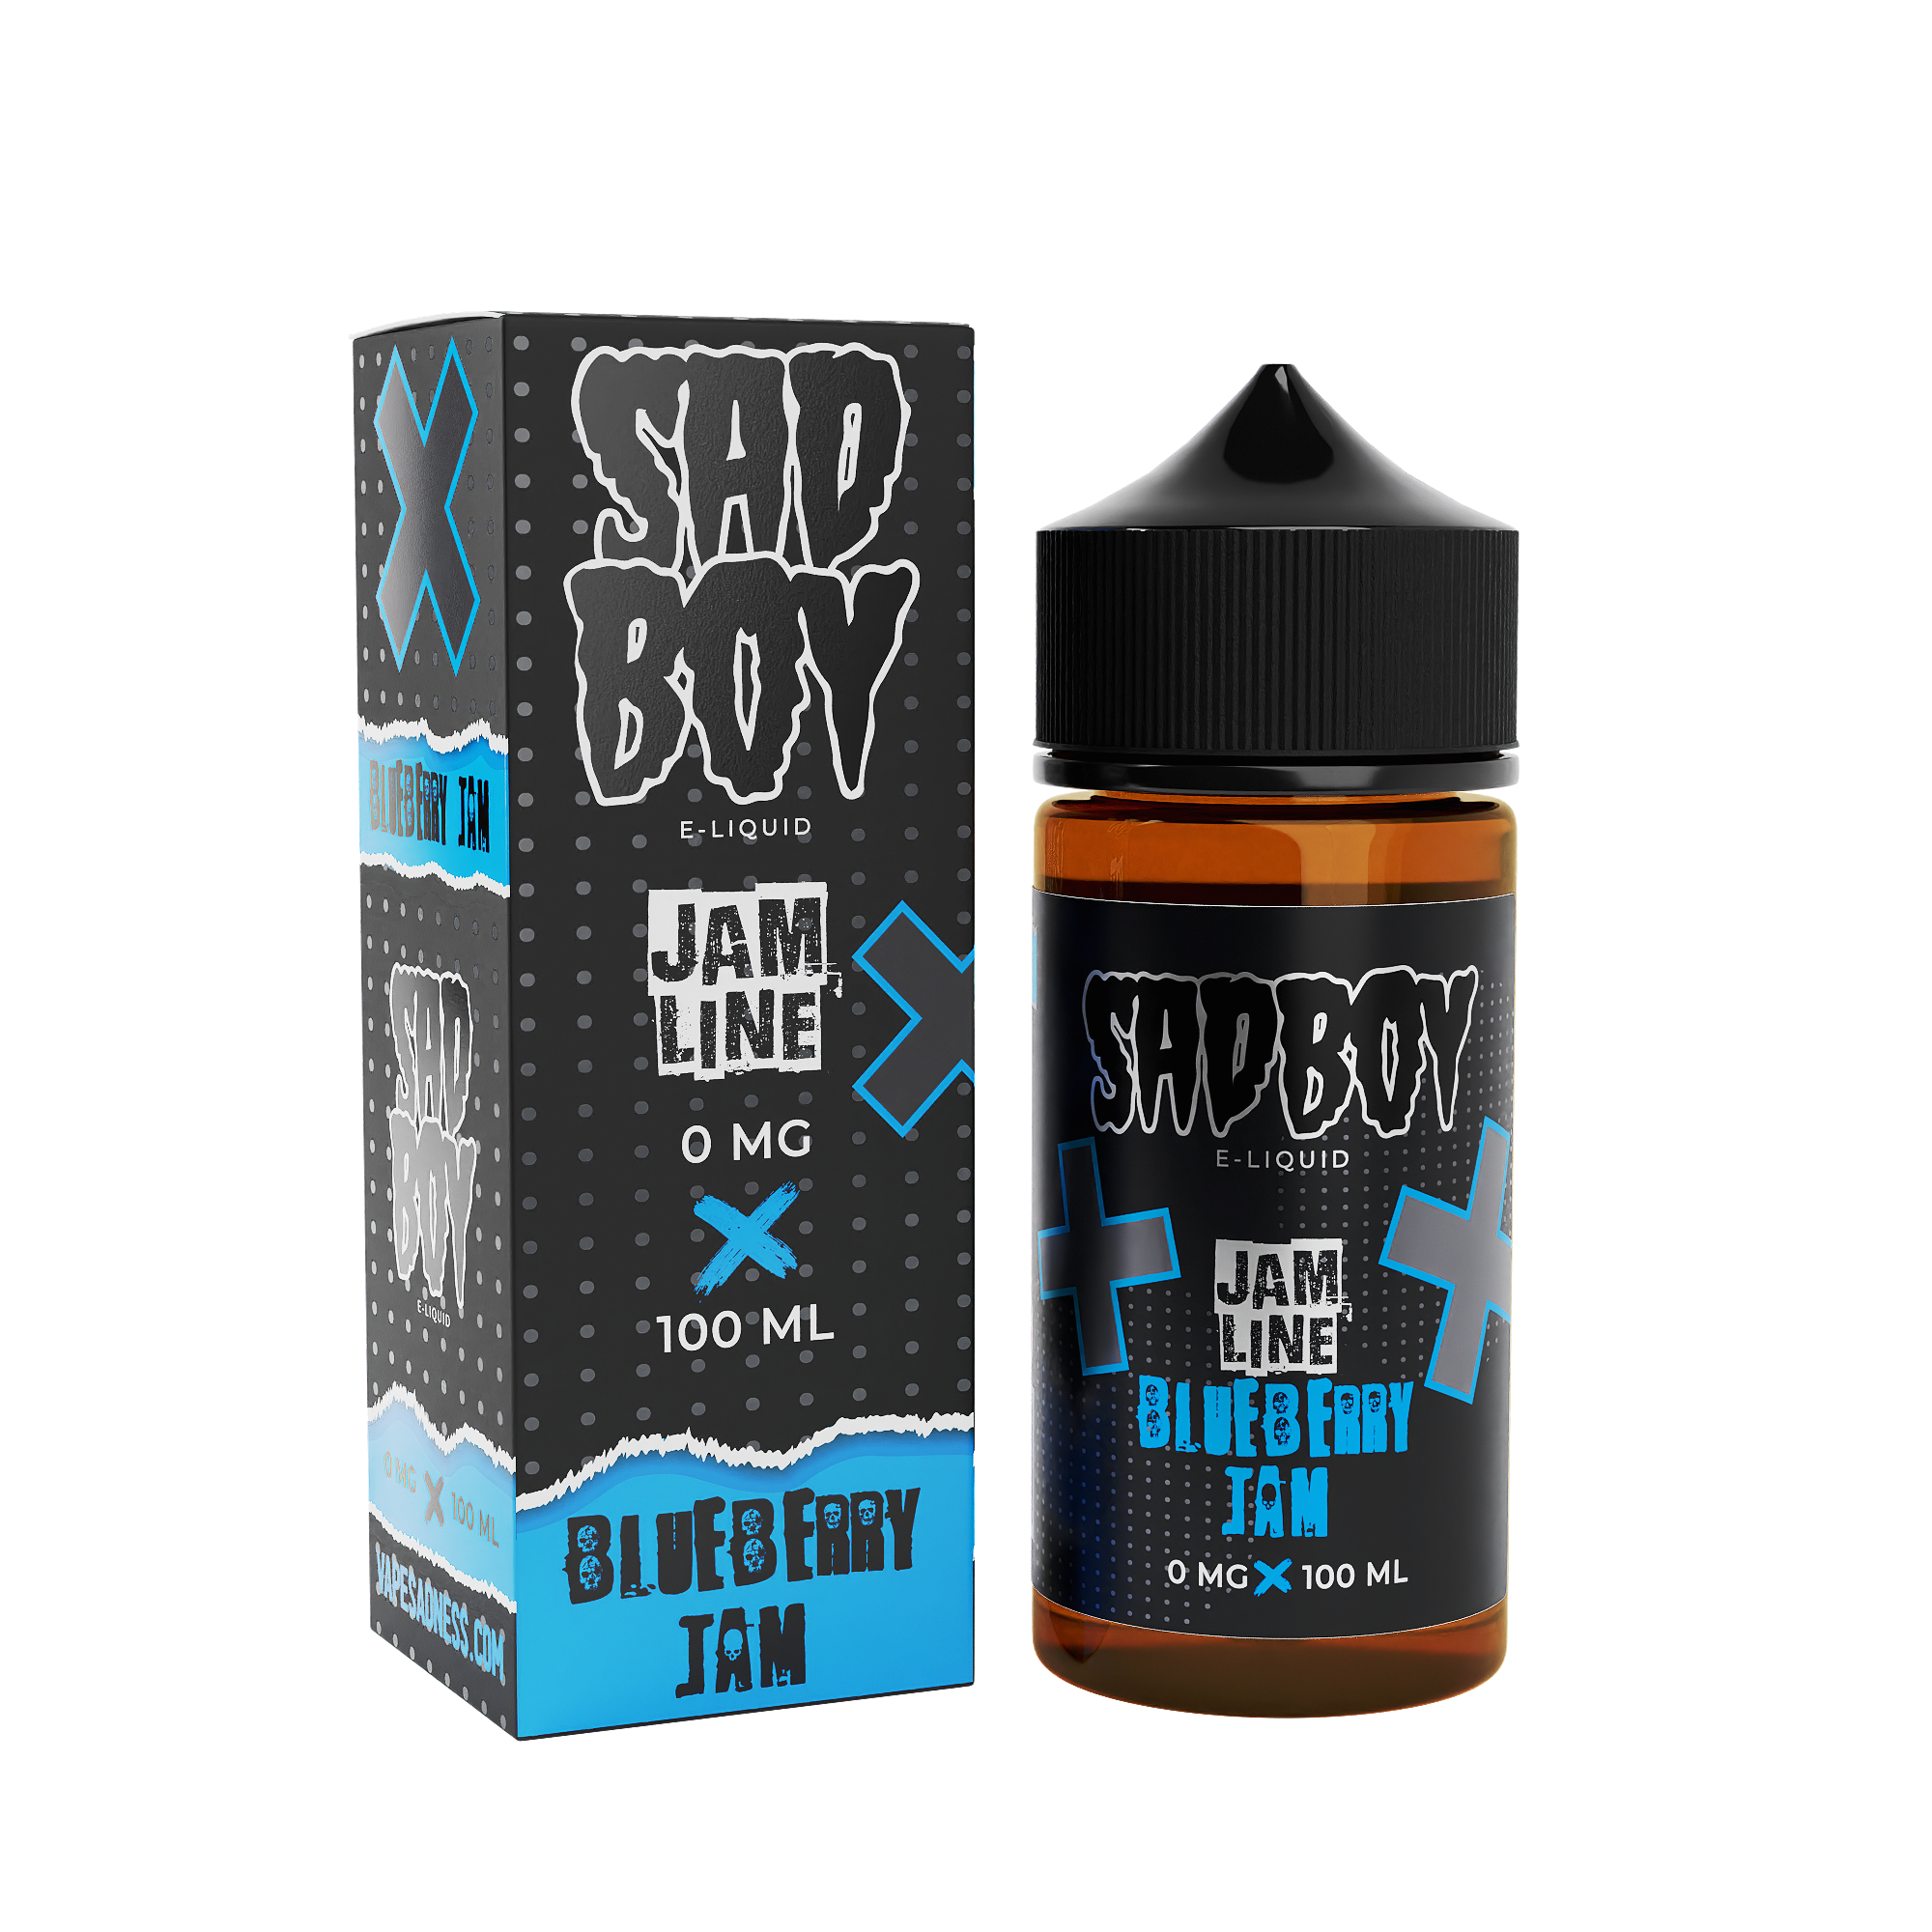 Sadboy E-Liquid 100ml | Blueberry Cookie | Wholesale